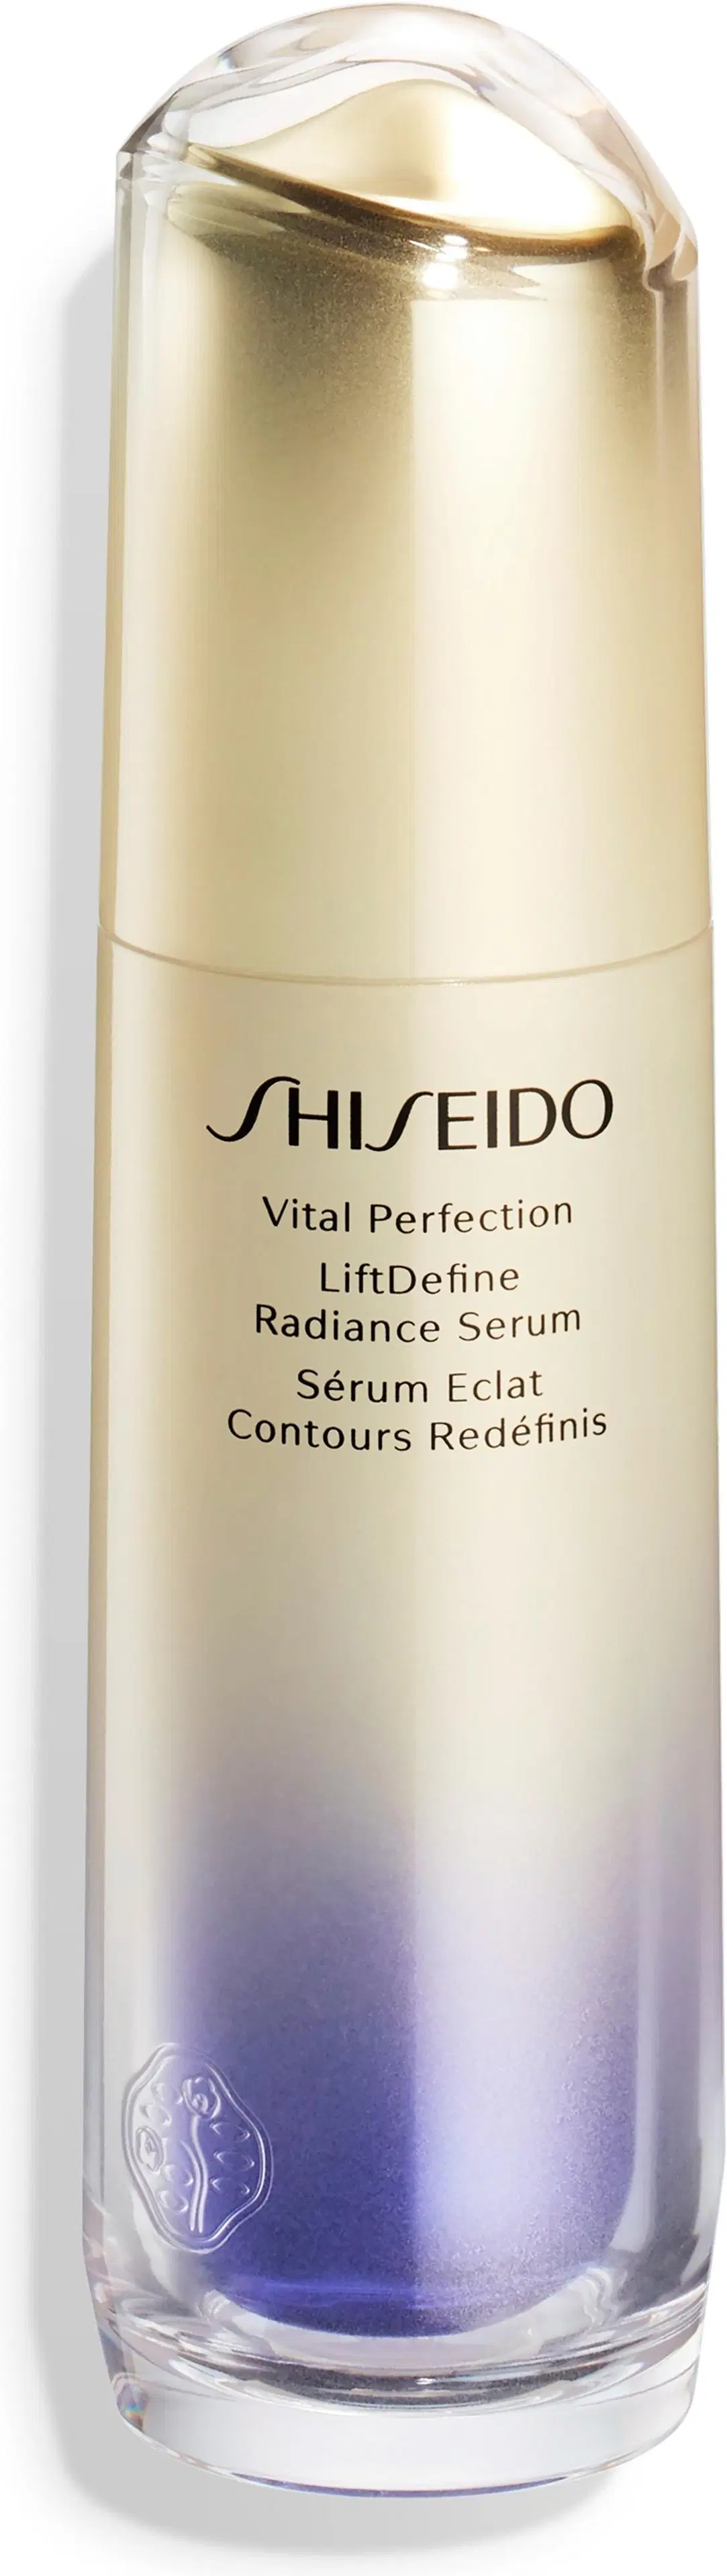 Shiseido Vital Perfection Liftdefine Radiance Seerumi 40 ml